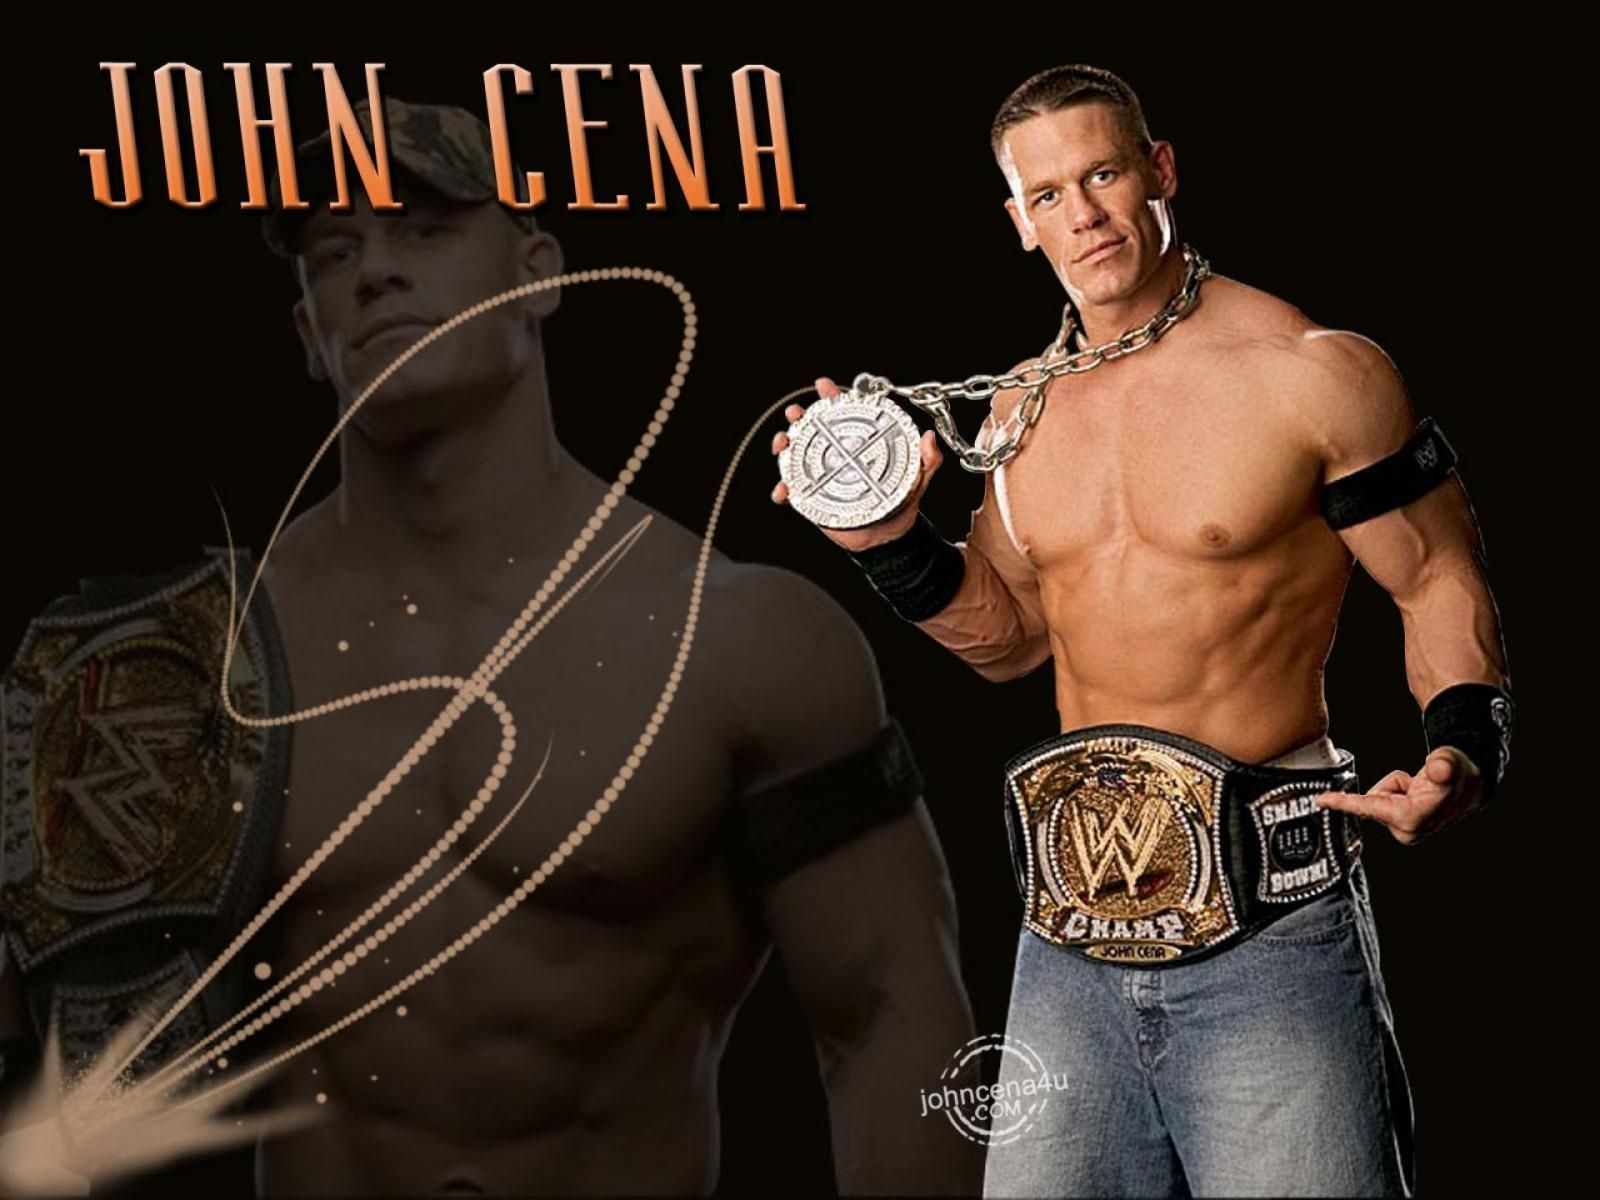 WWE John Cena Champion Belt Wallpaper. TanukinoSippo. John cena, Wwe, Wwf